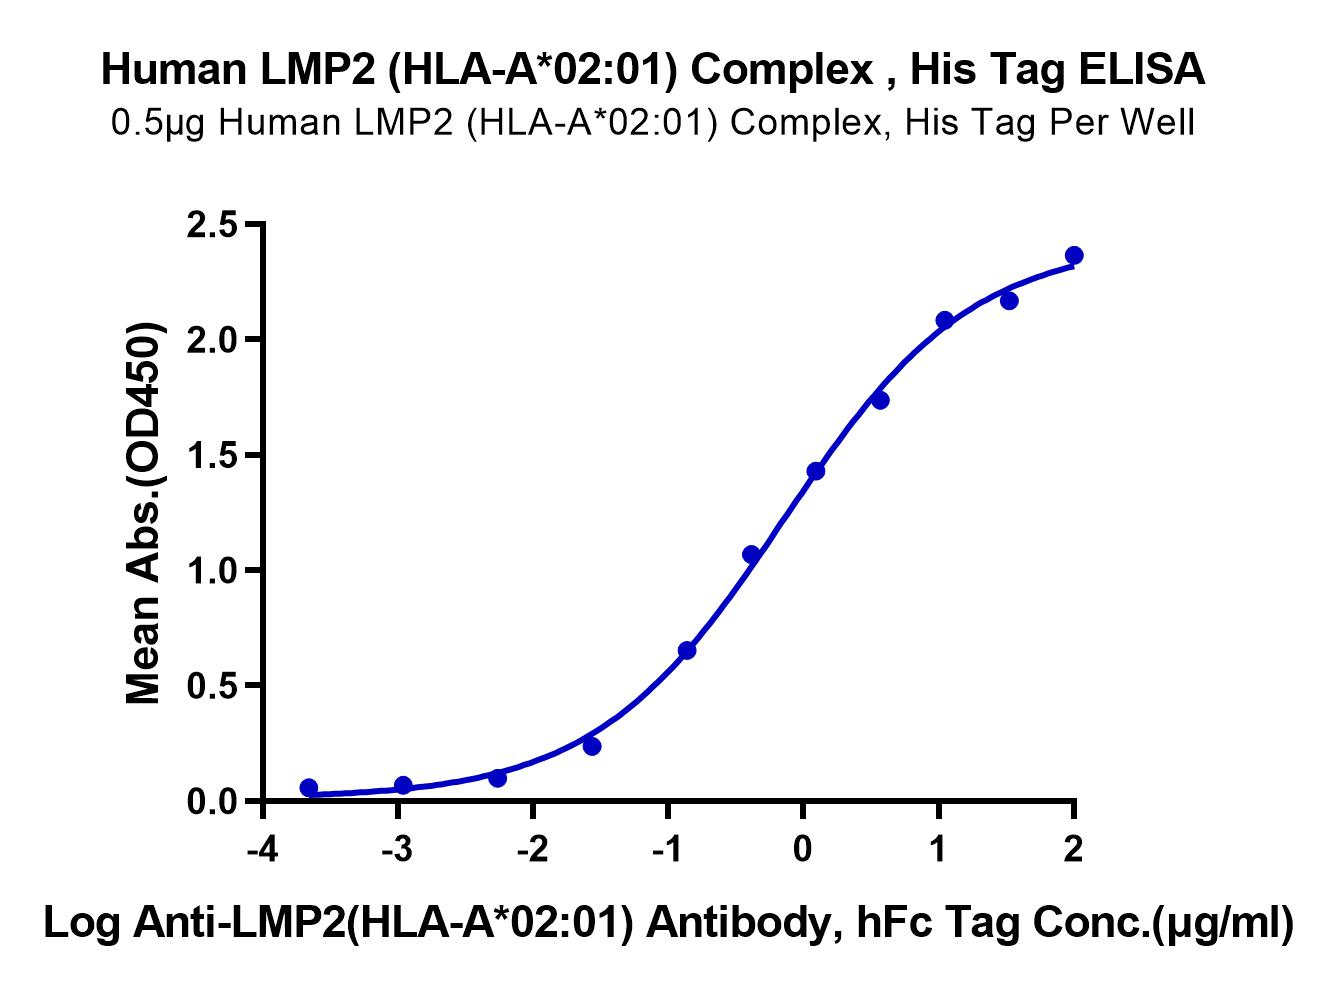 Human LMP2 (HLA-A*02:01) Protein (LTP10351)